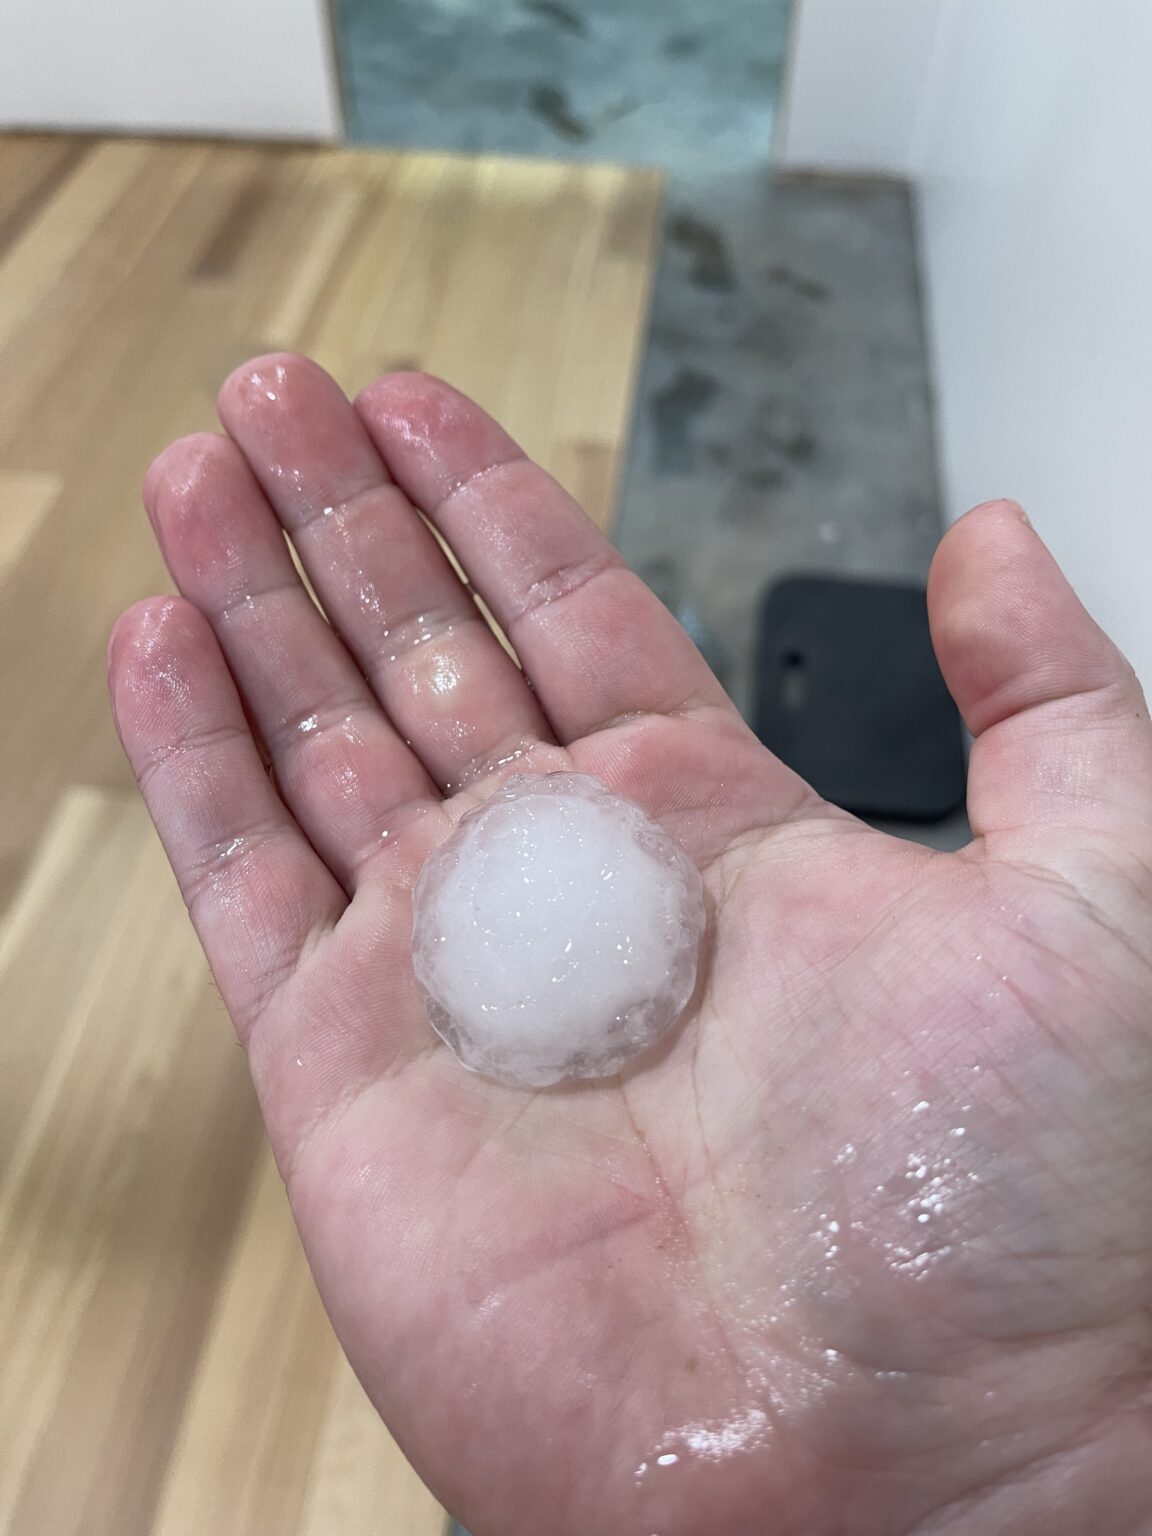 person holding walnut size hailstone